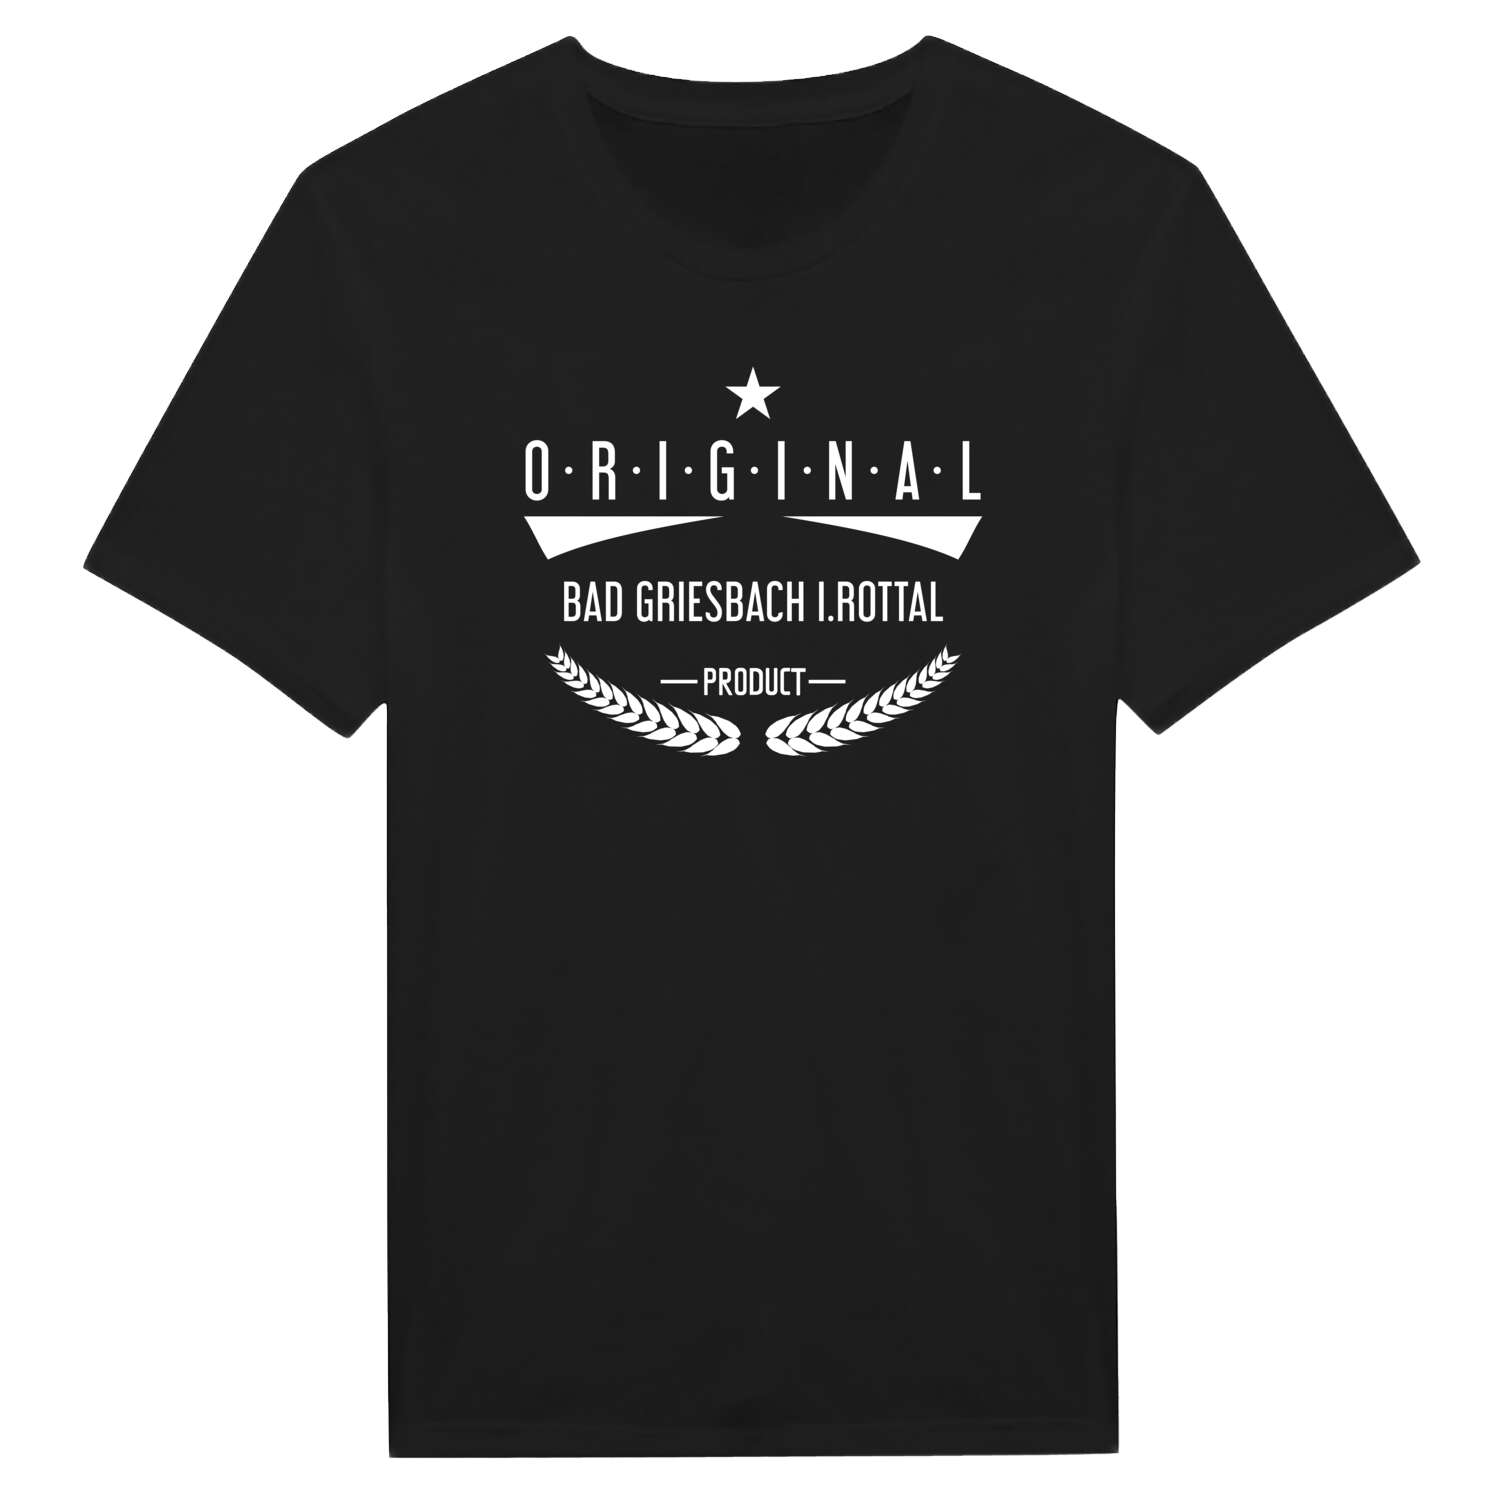 Bad Griesbach i.Rottal T-Shirt »Original Product«